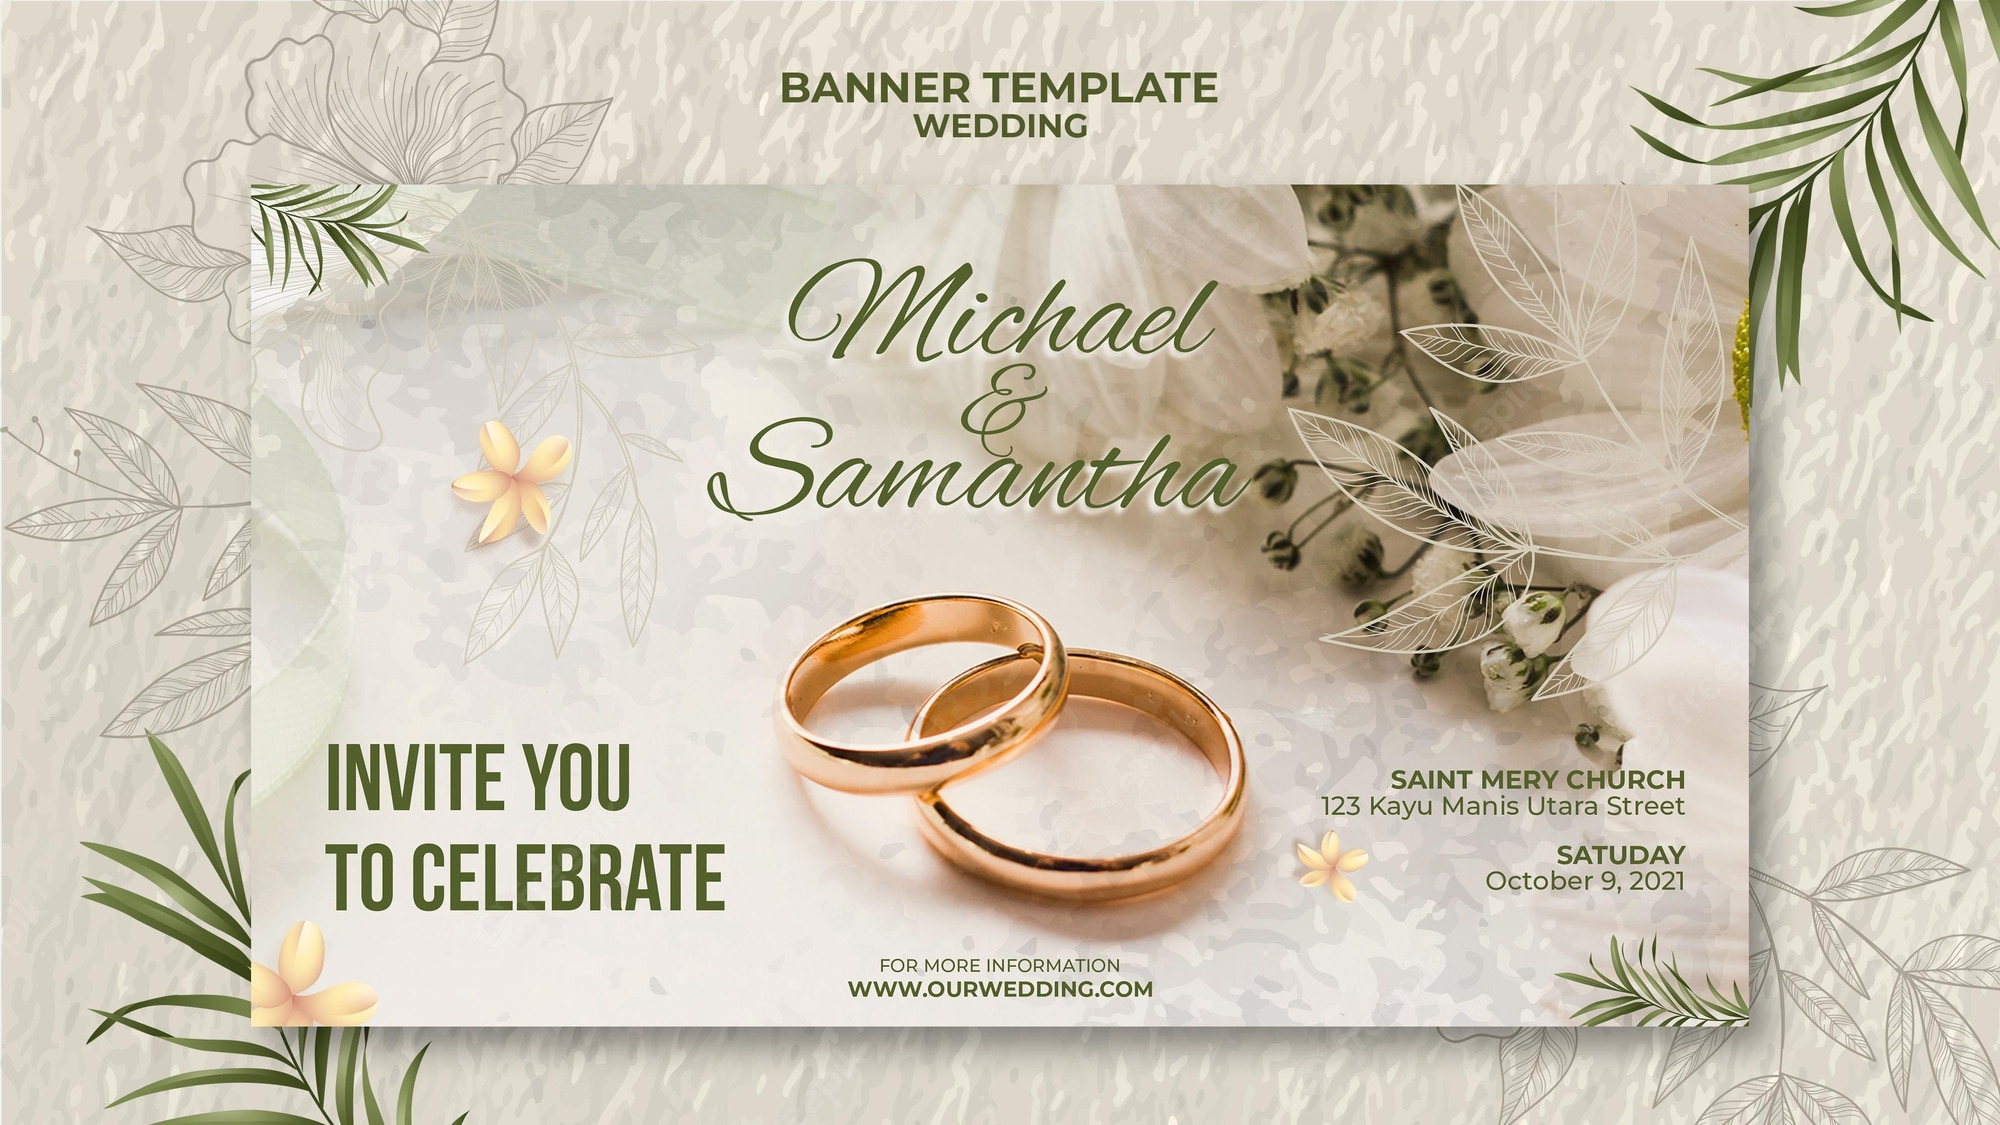 Wedding banner Images  Free Vectors, Stock Photos & PSD In Wedding Banner Design Templates